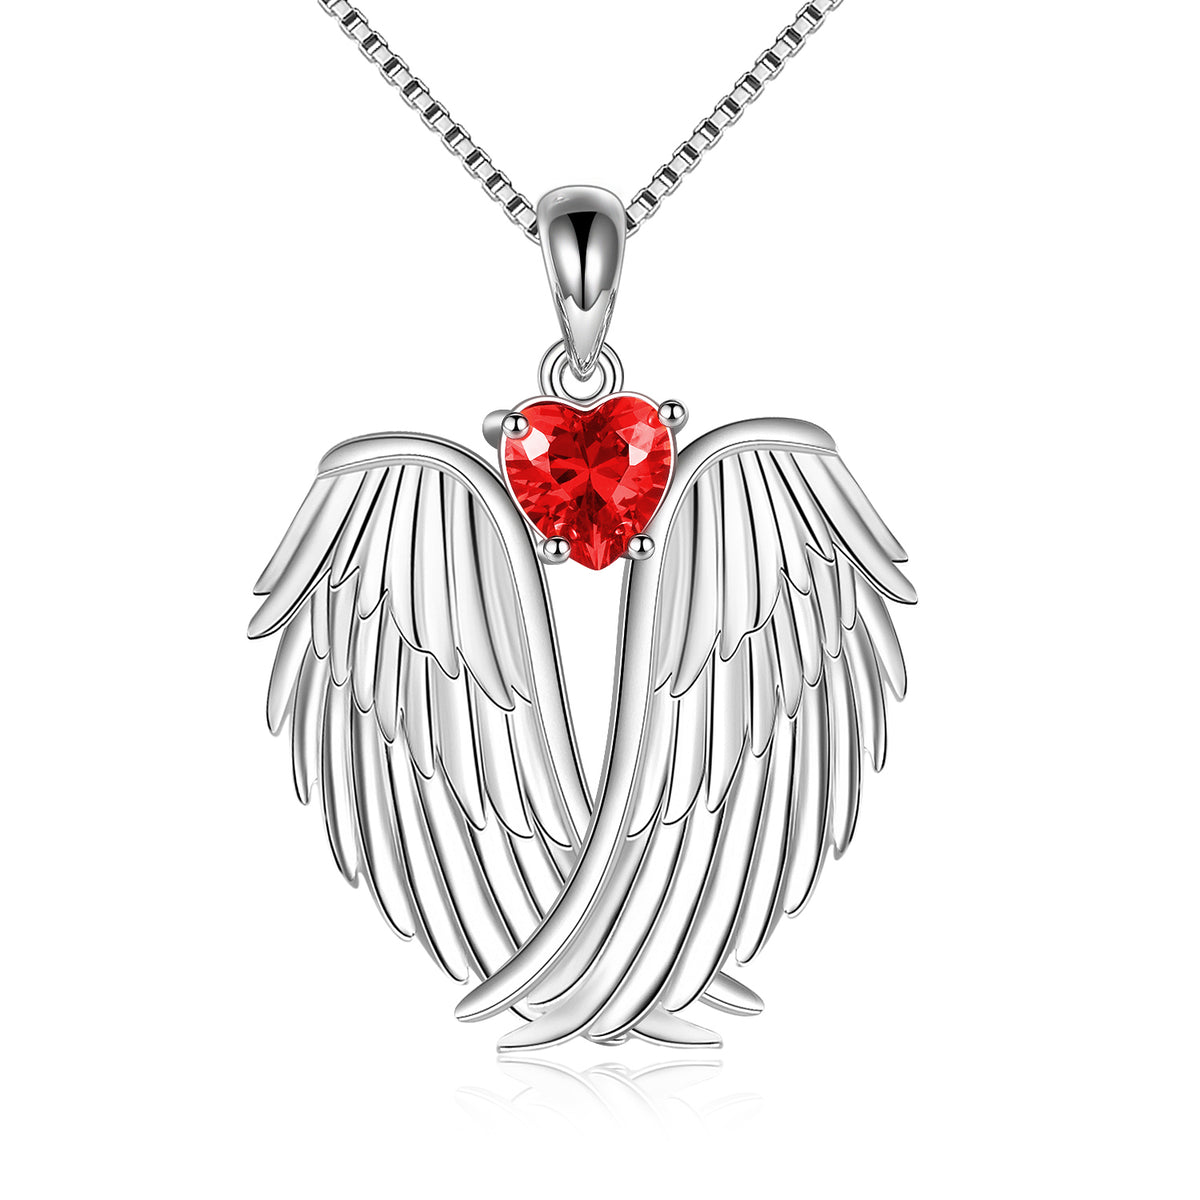 Sterling Silver Guardian Angel Birthstone Necklace Wings Pendant Jewelry Angelwarriorfitness.com